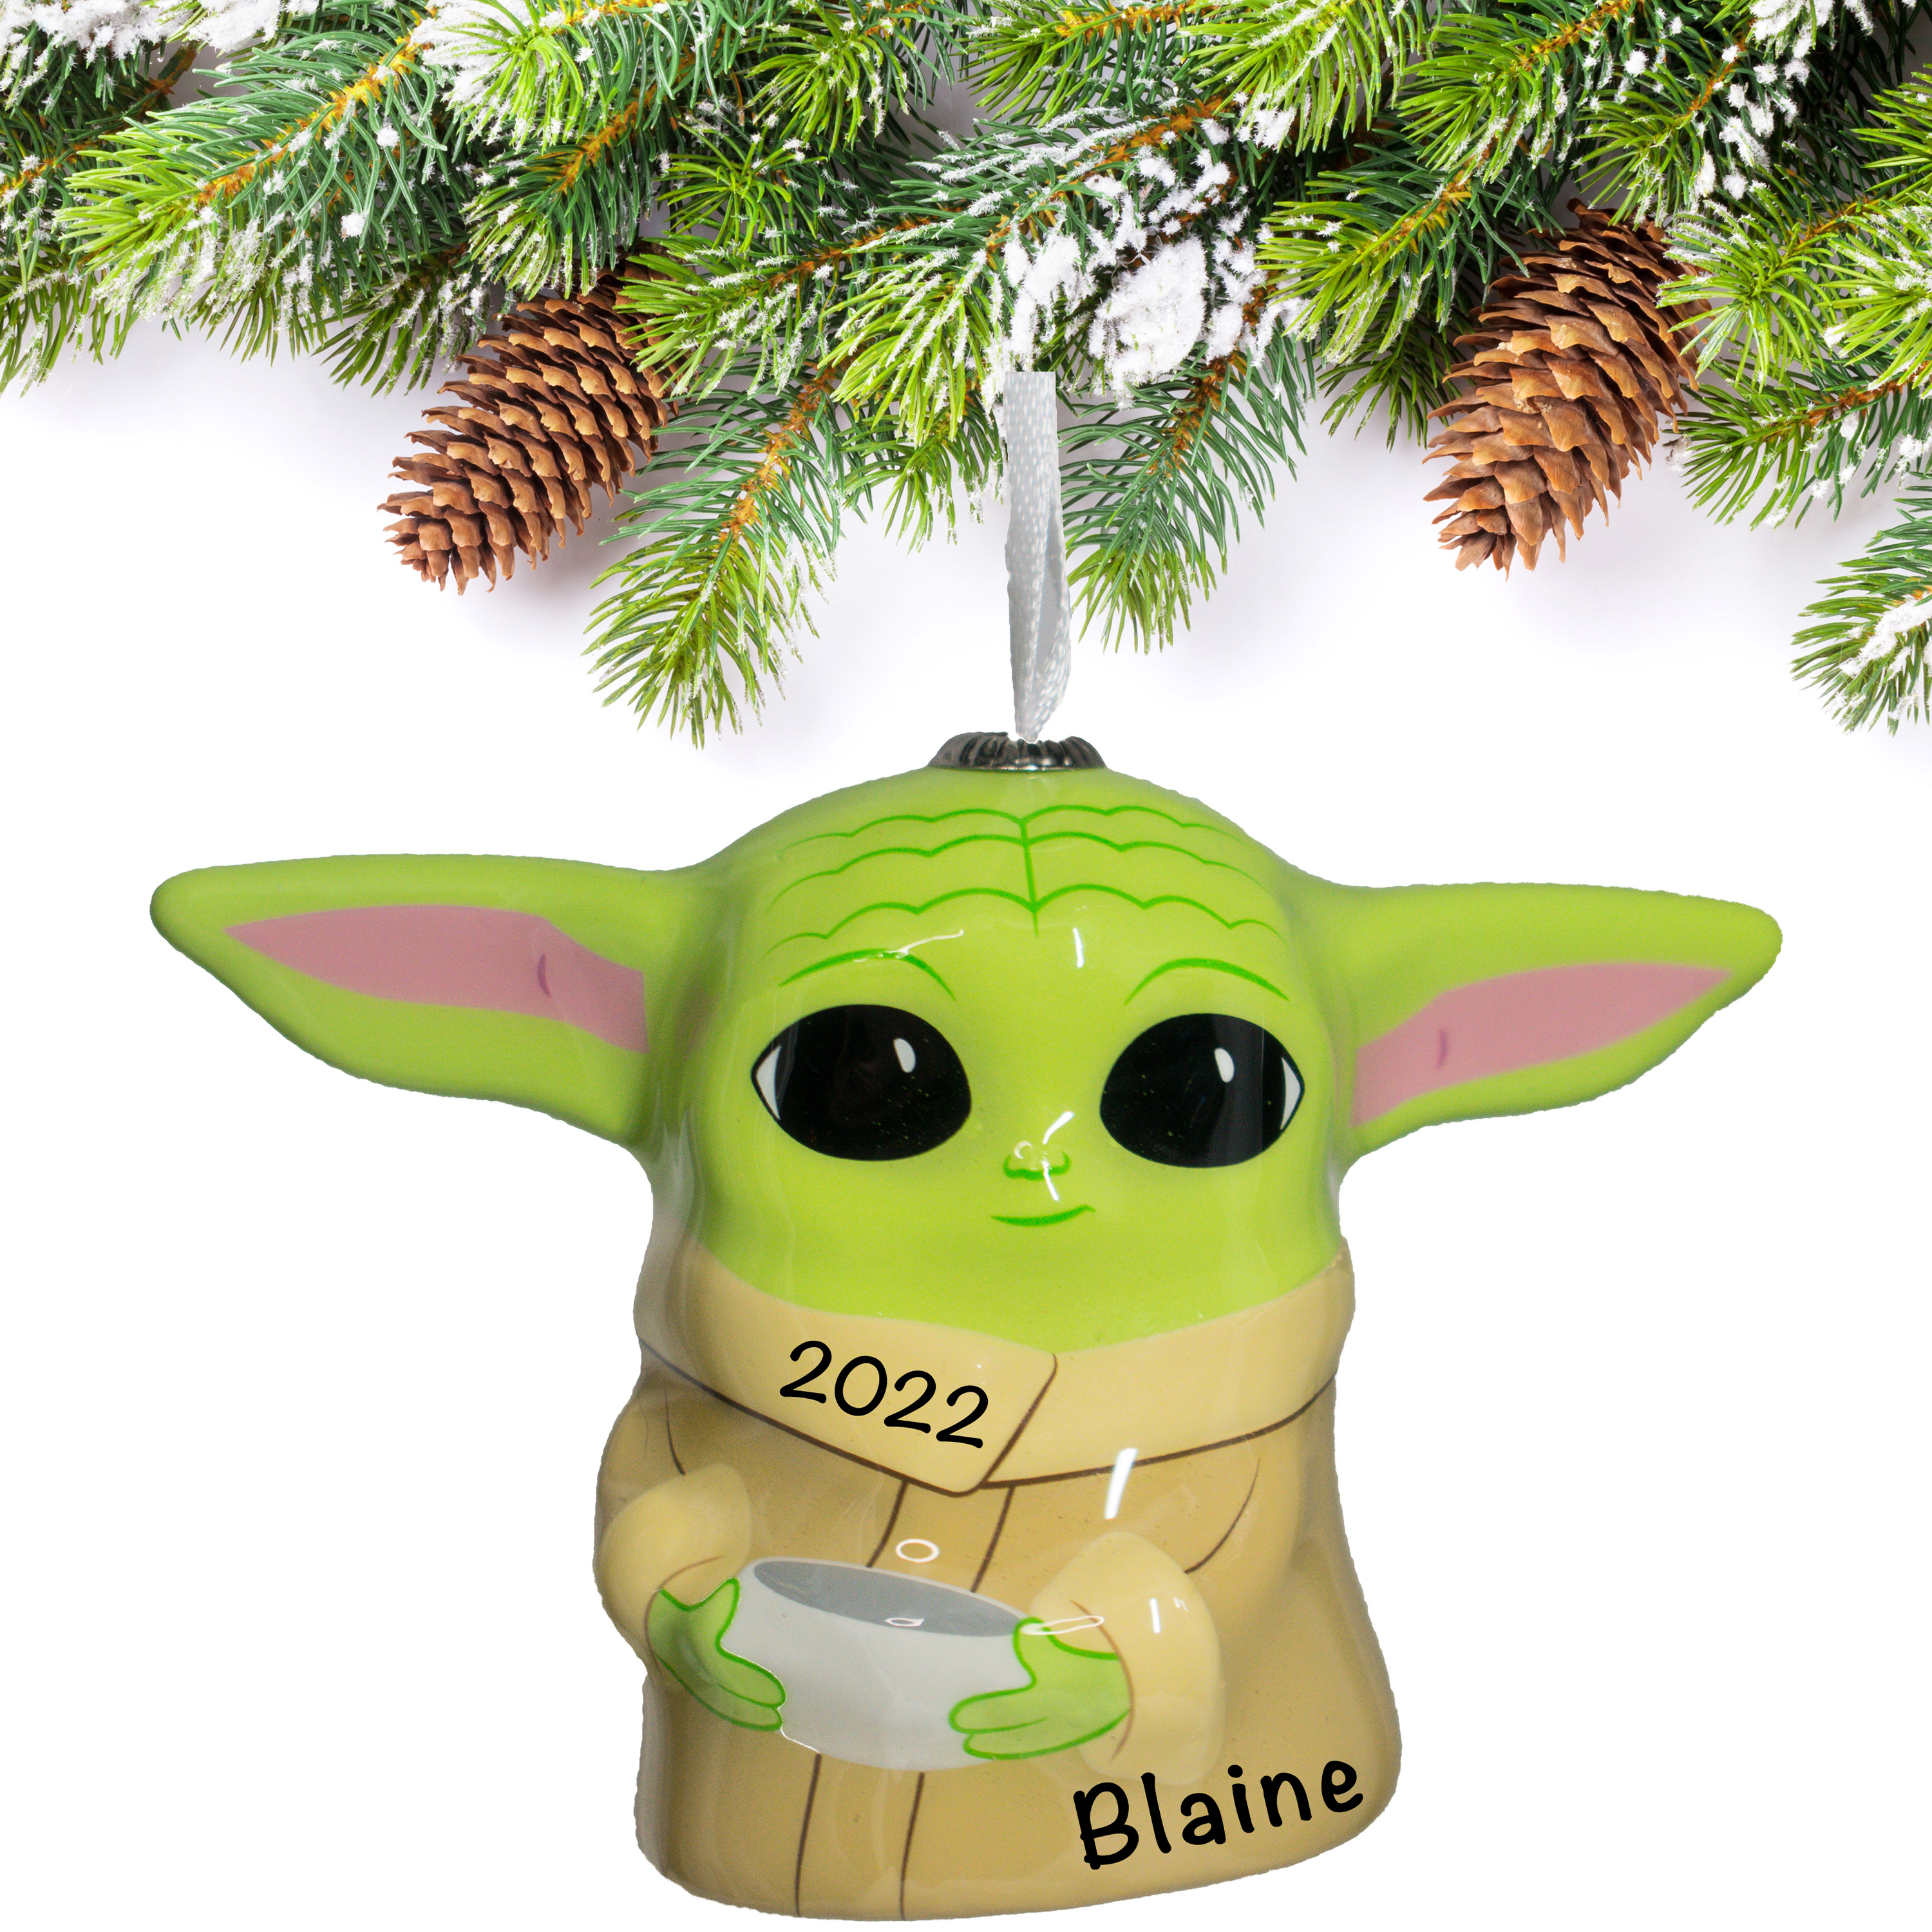 https://myornament.com/wp-content/uploads/2022/10/3HCM0956-Baby-Yoda-The-Child-Grogu-Christmas-Ornament-Personalized-Star-Wars-Grogu-Christmas-Ornament-for-Tree-Holiday-Traditions-Gift-xmas.jpg